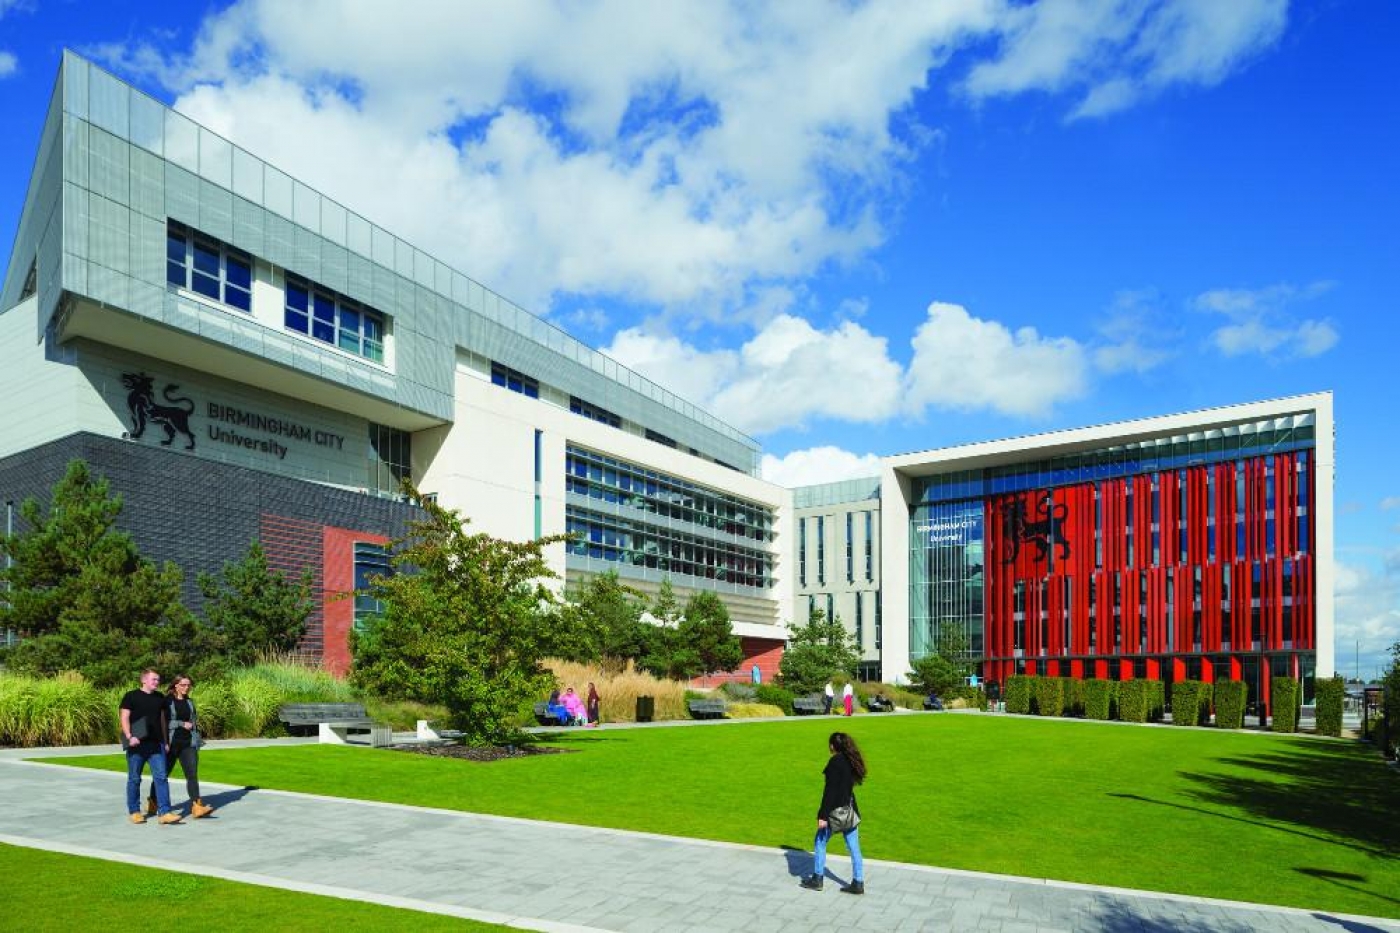 Birmingham City University - City South Campus